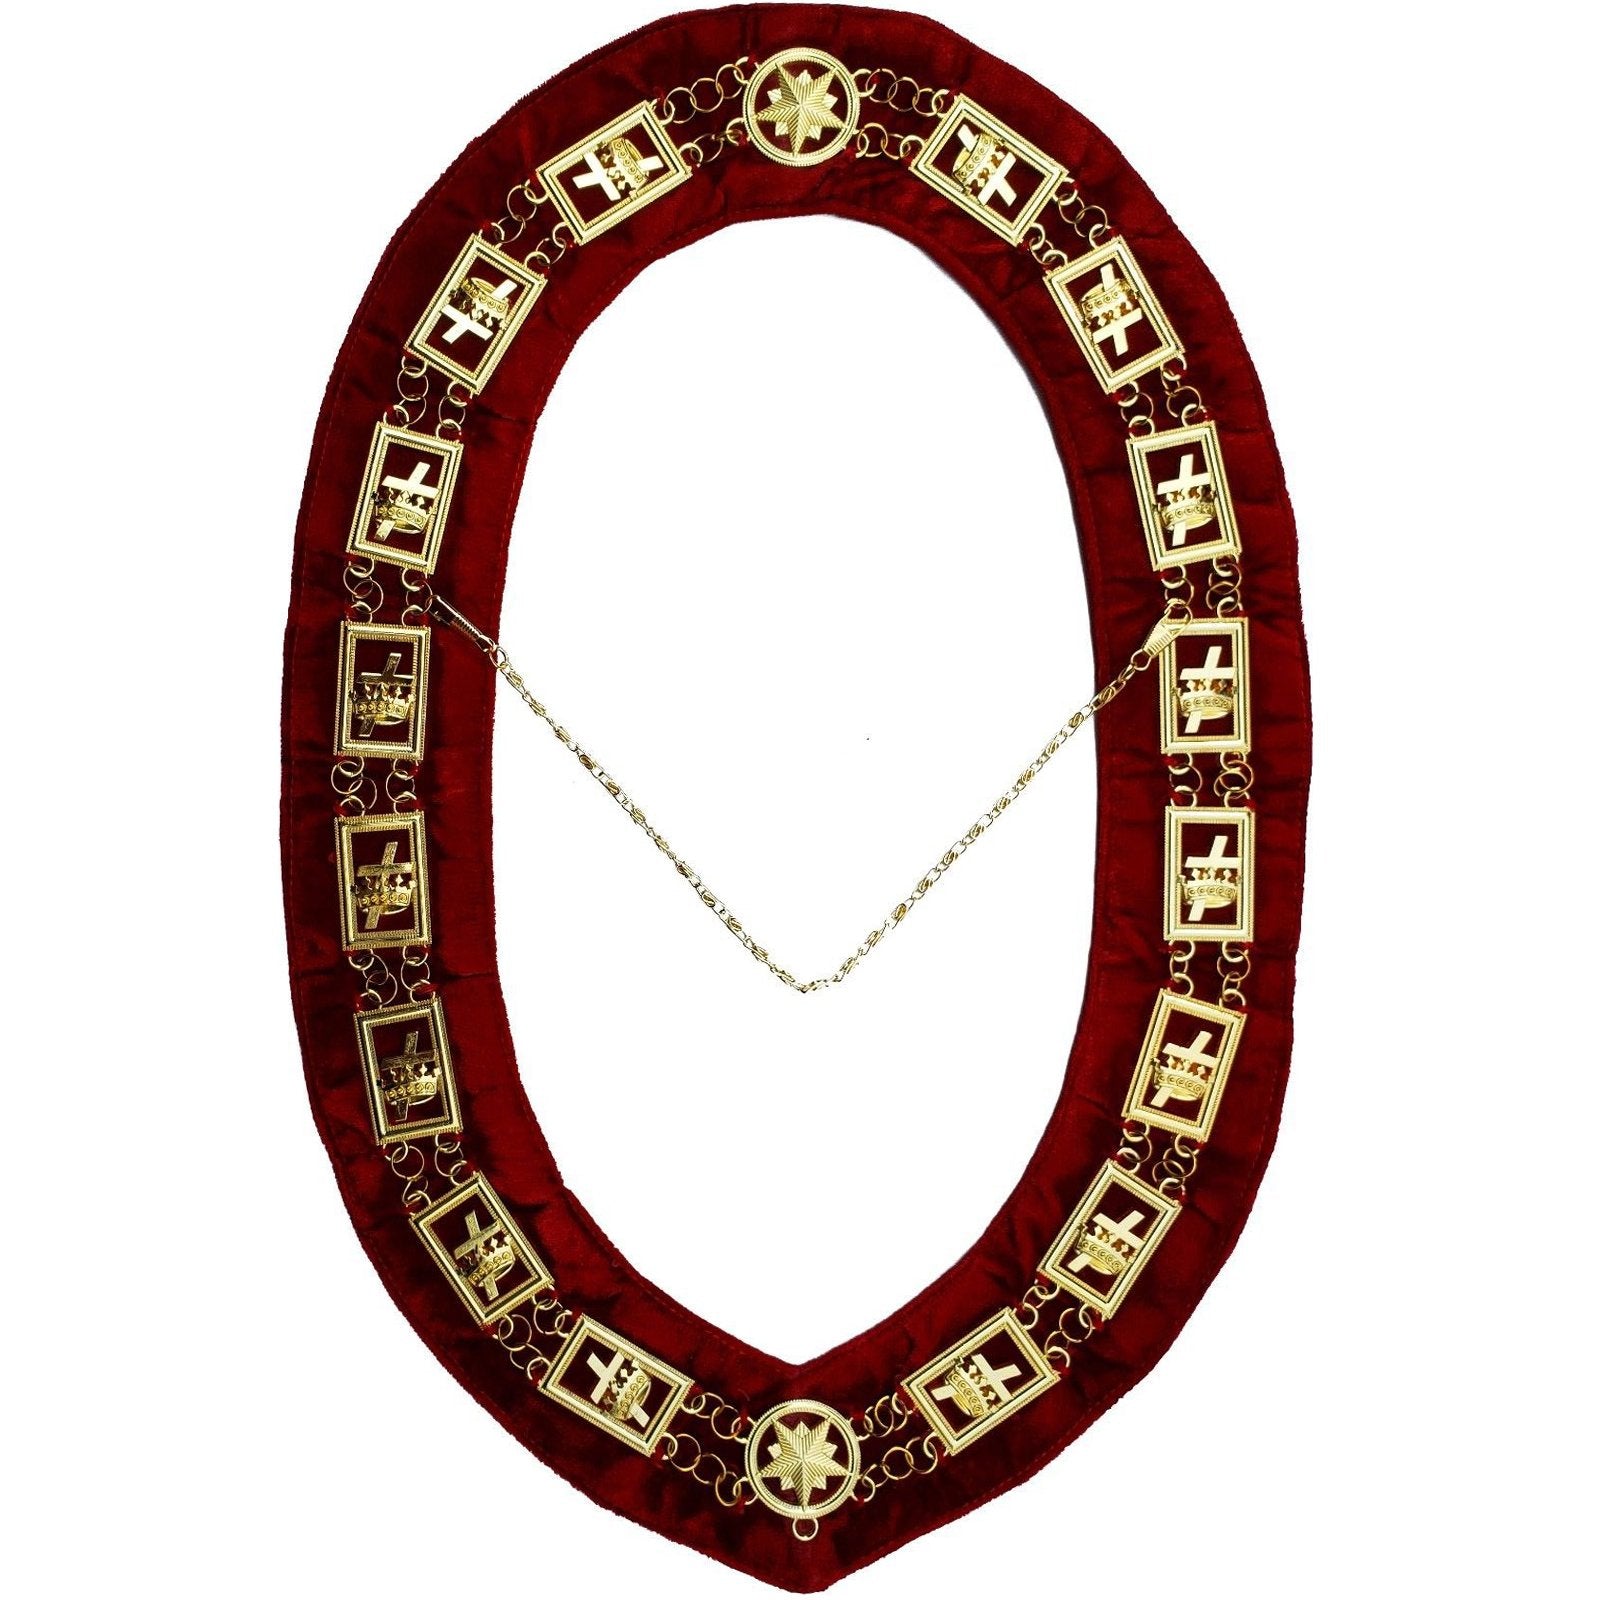 Knights Templar Commandery Chain Collar - Gold Plated on Red Velvet - Bricks Masons